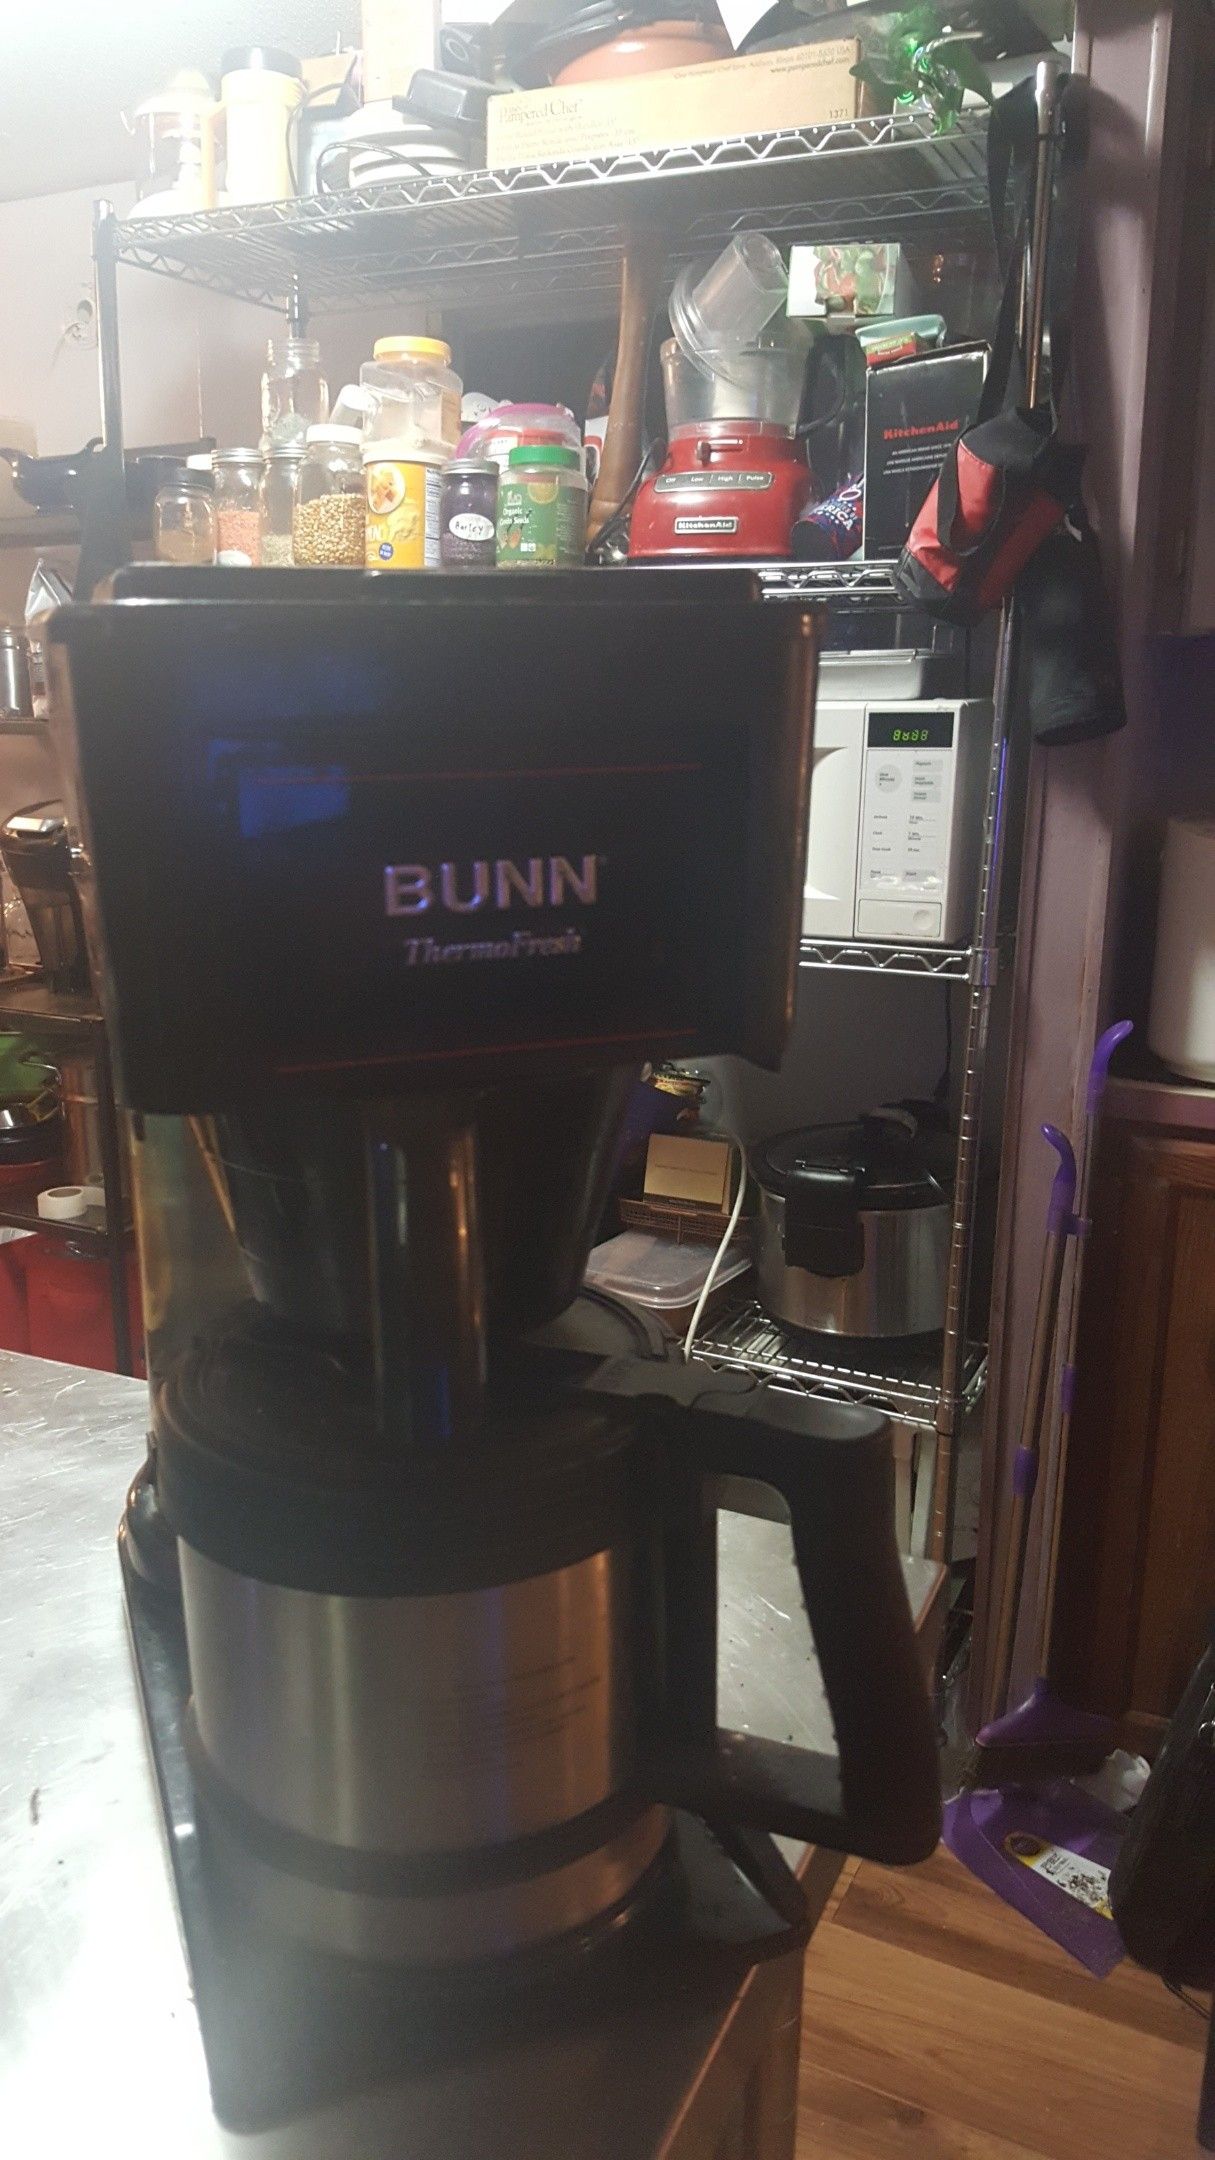 Bunn Thermo Fresh Coffee Maker